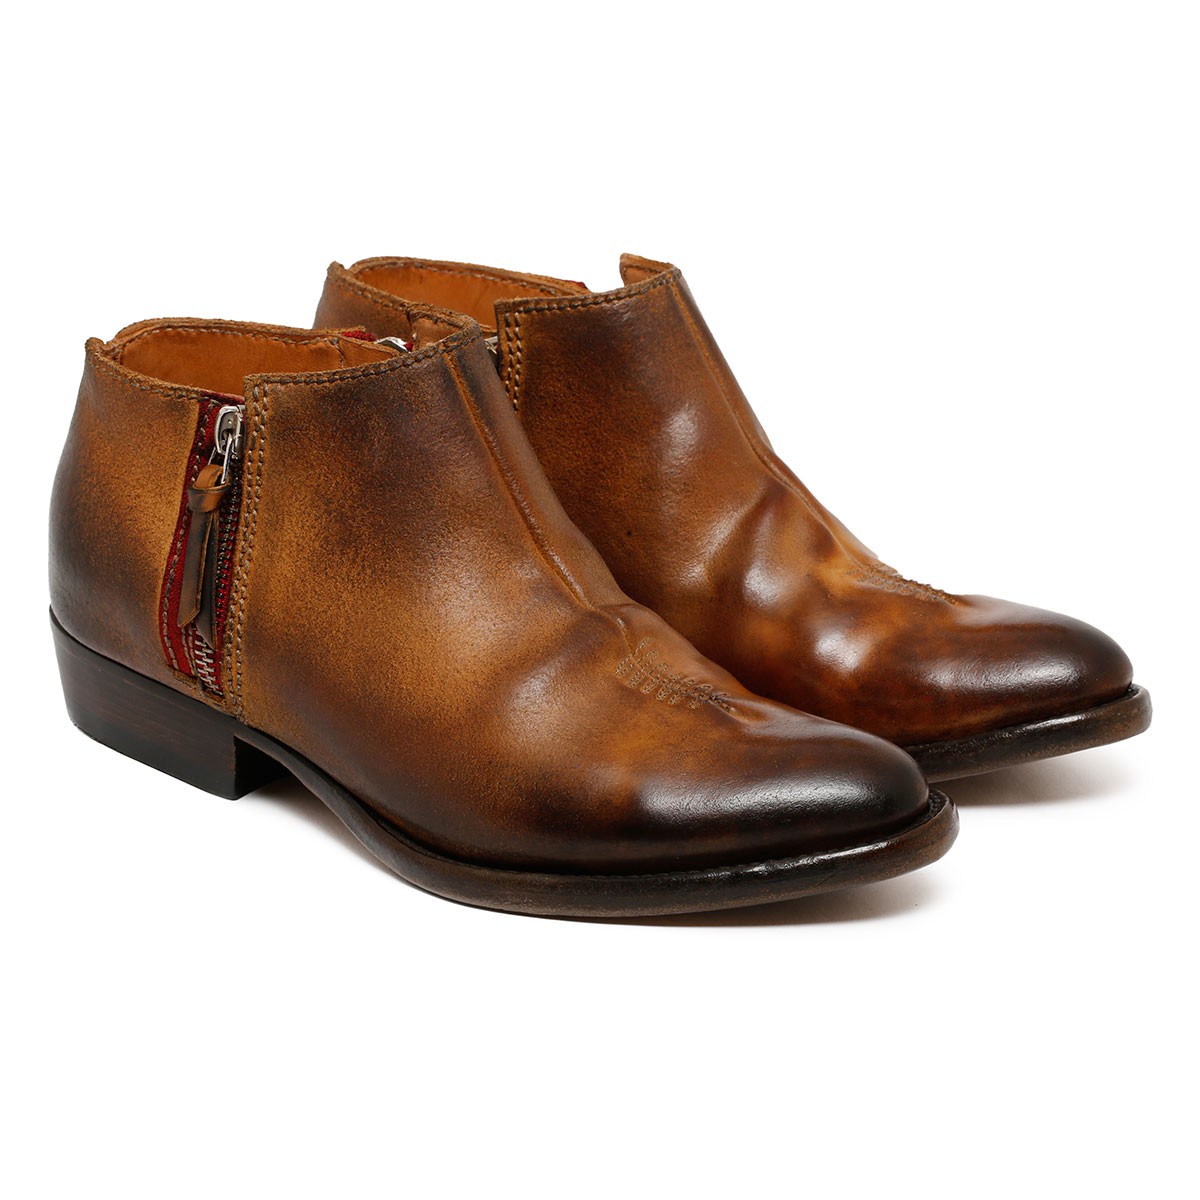 Degradé dark brown ankle boots